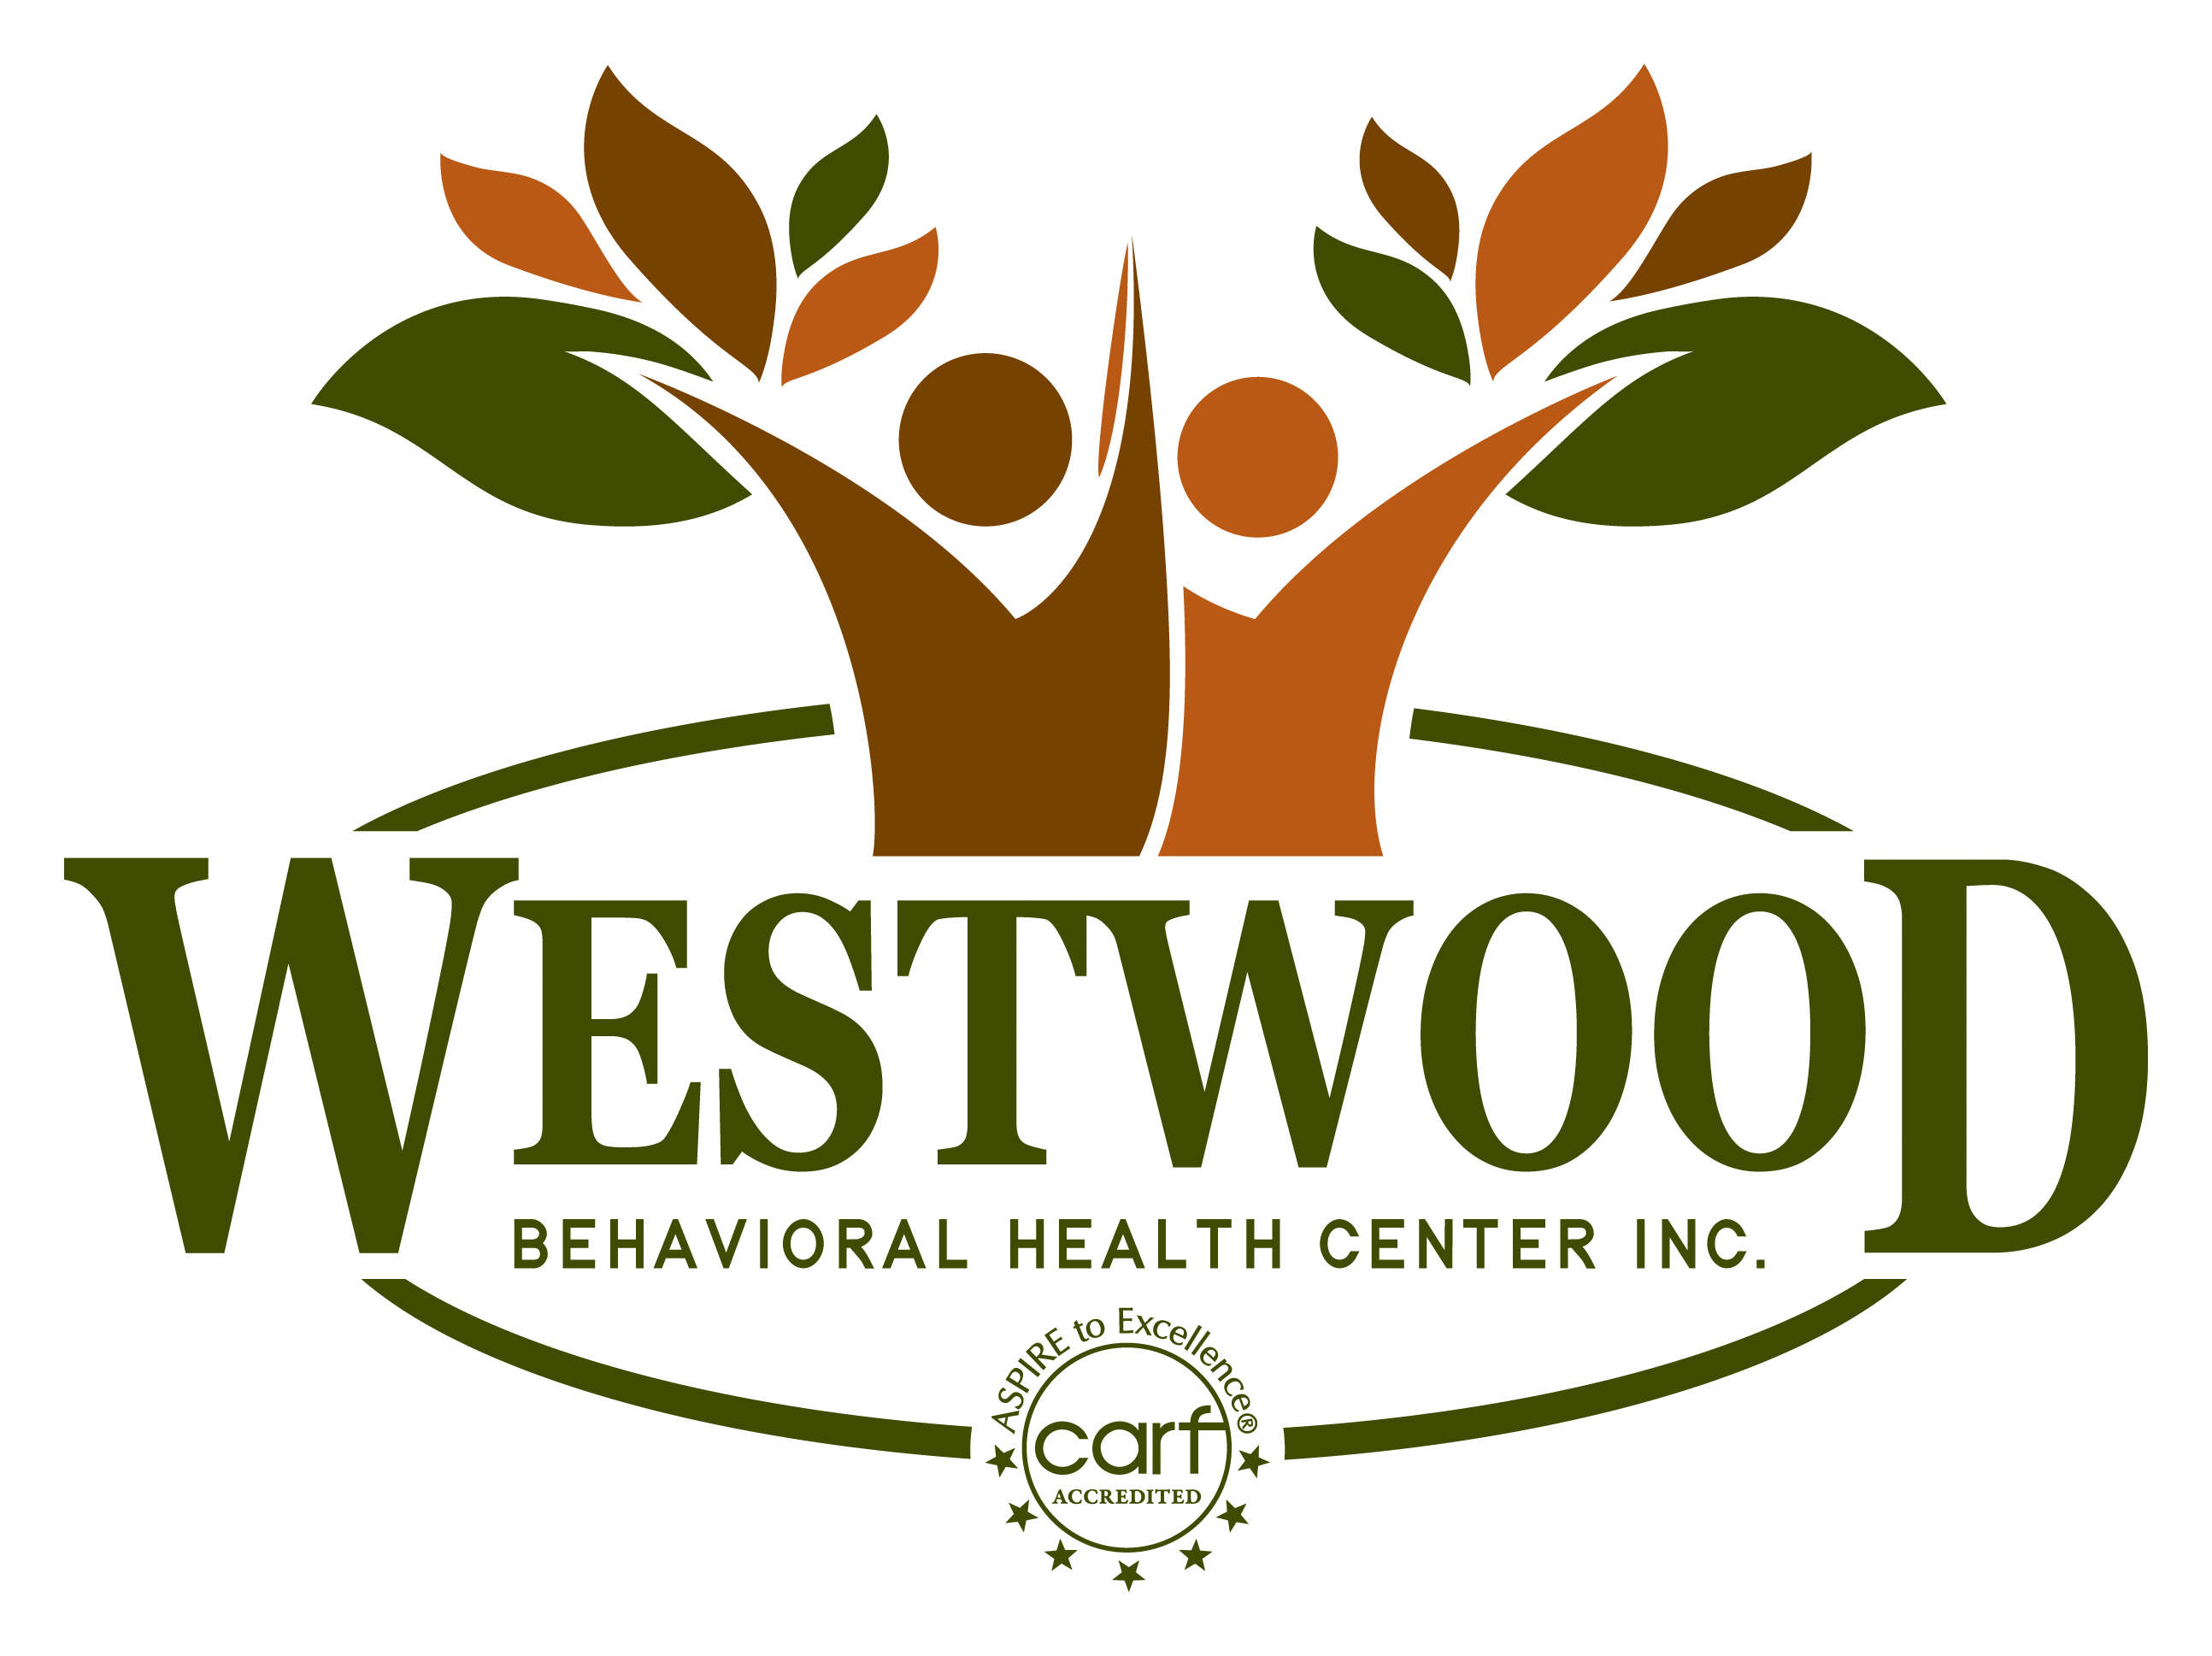 Westwood Behavioral Health Center, Inc.